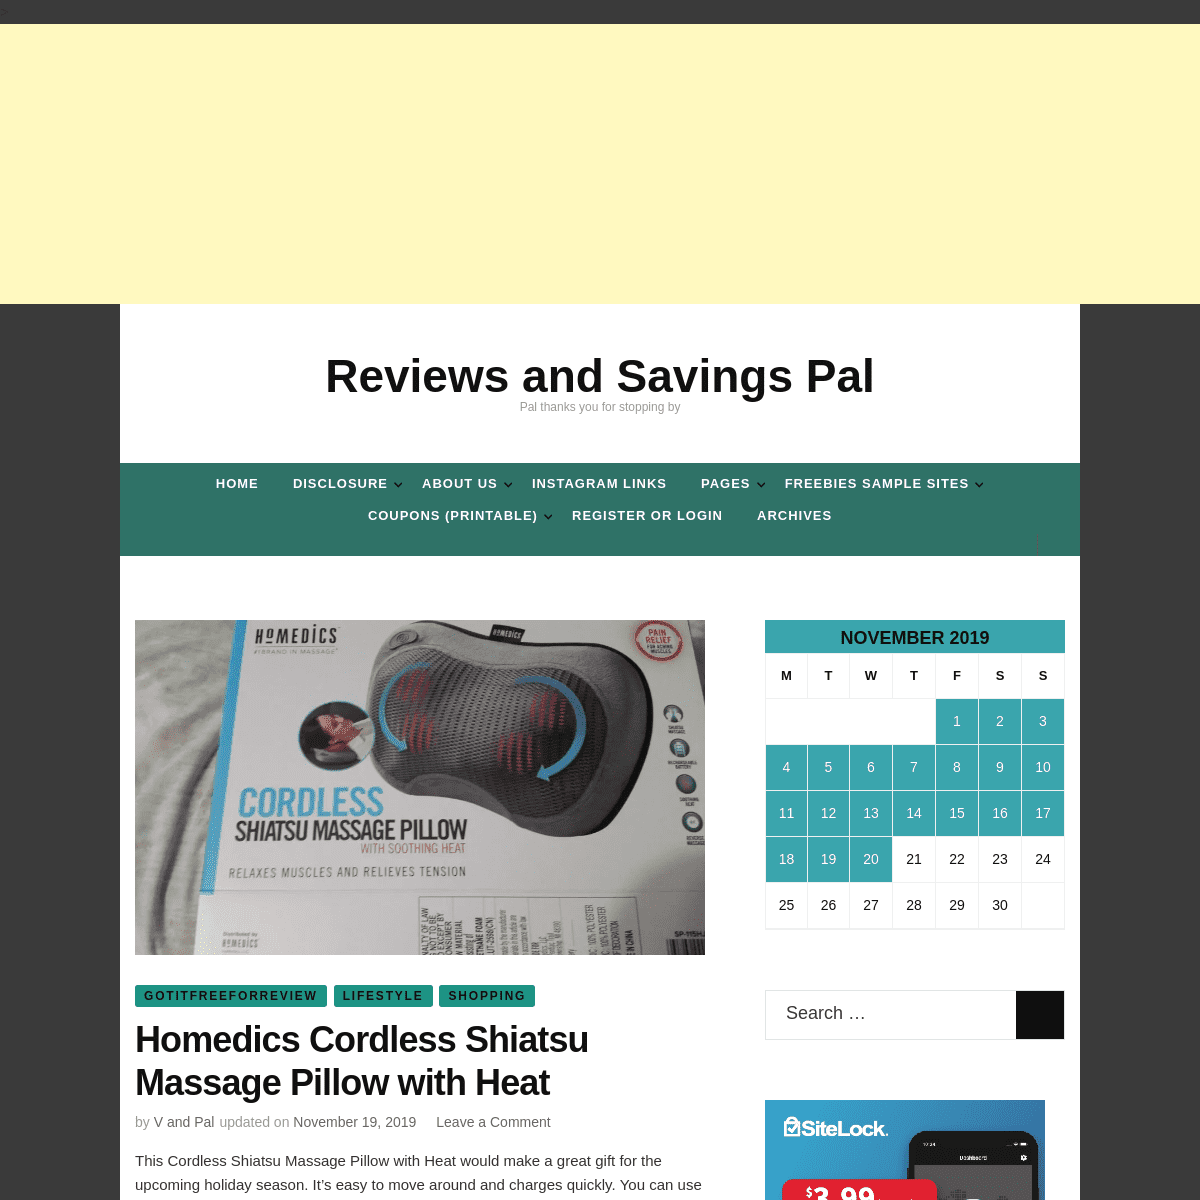 A complete backup of reviewsandsavingspal.com